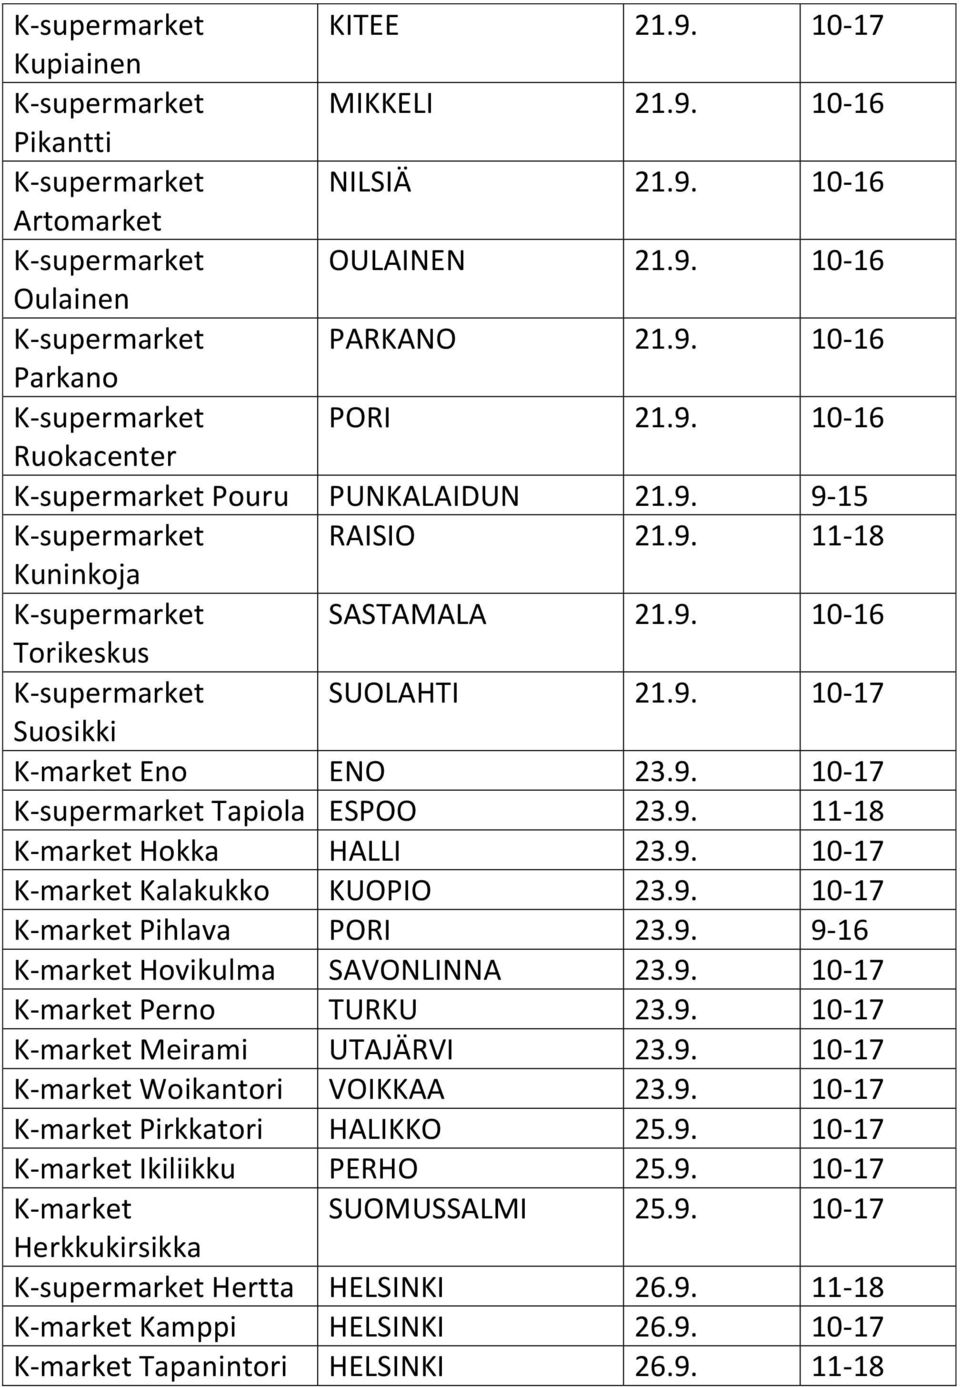 9. 10-17 K-supermarket Tapiola ESPOO 23.9. 11-18 K-market Hokka HALLI 23.9. 10-17 K-market Kalakukko KUOPIO 23.9. 10-17 K-market Pihlava PORI 23.9. 9-16 K-market Hovikulma SAVONLINNA 23.9. 10-17 K-market Perno TURKU 23.